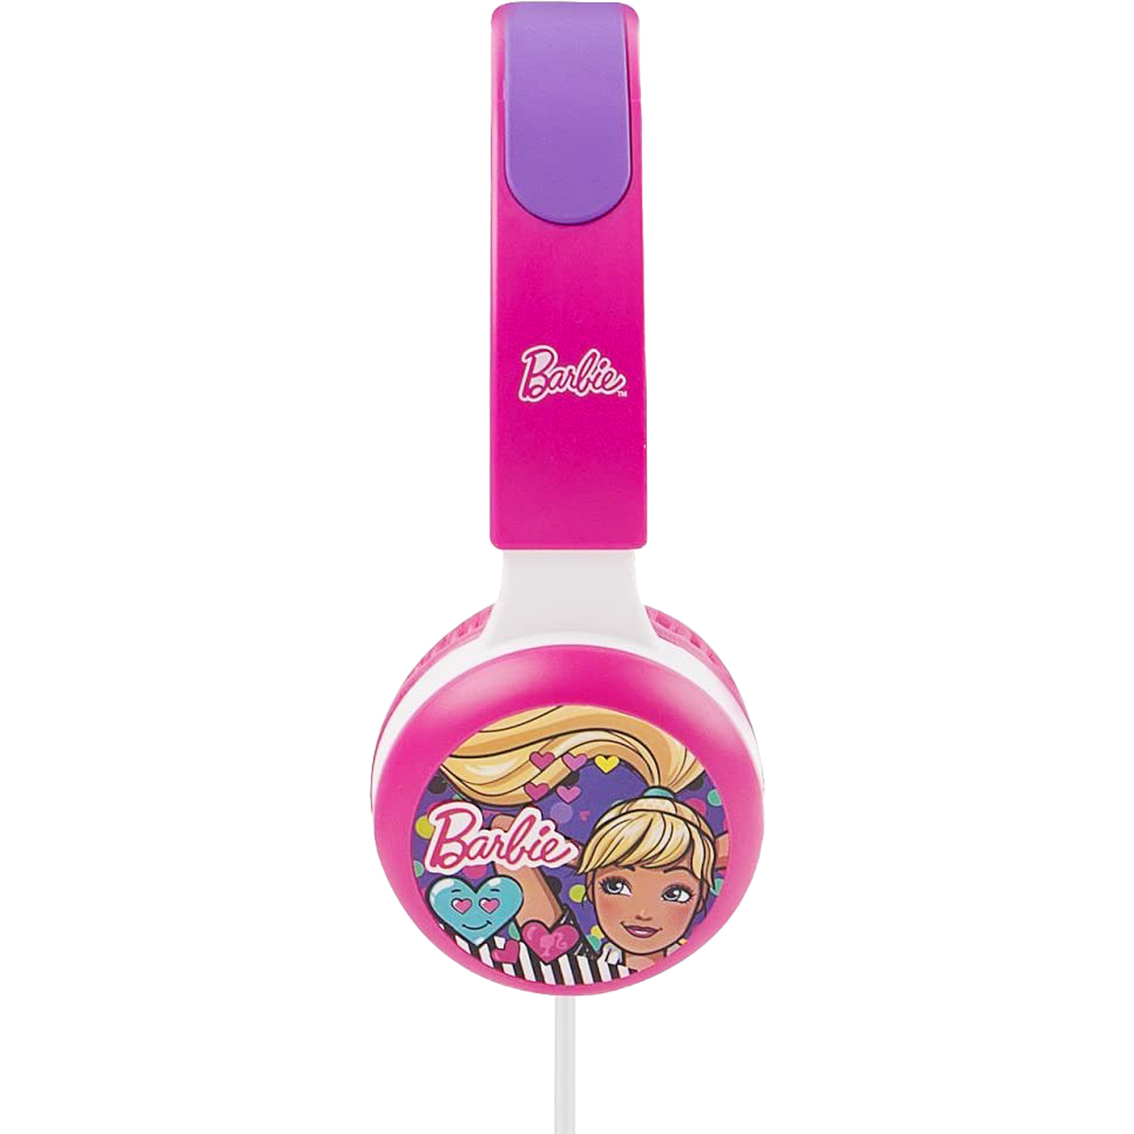 Barbie Live Out Loud Kidsafe Molded Headphones - Image 4 of 7